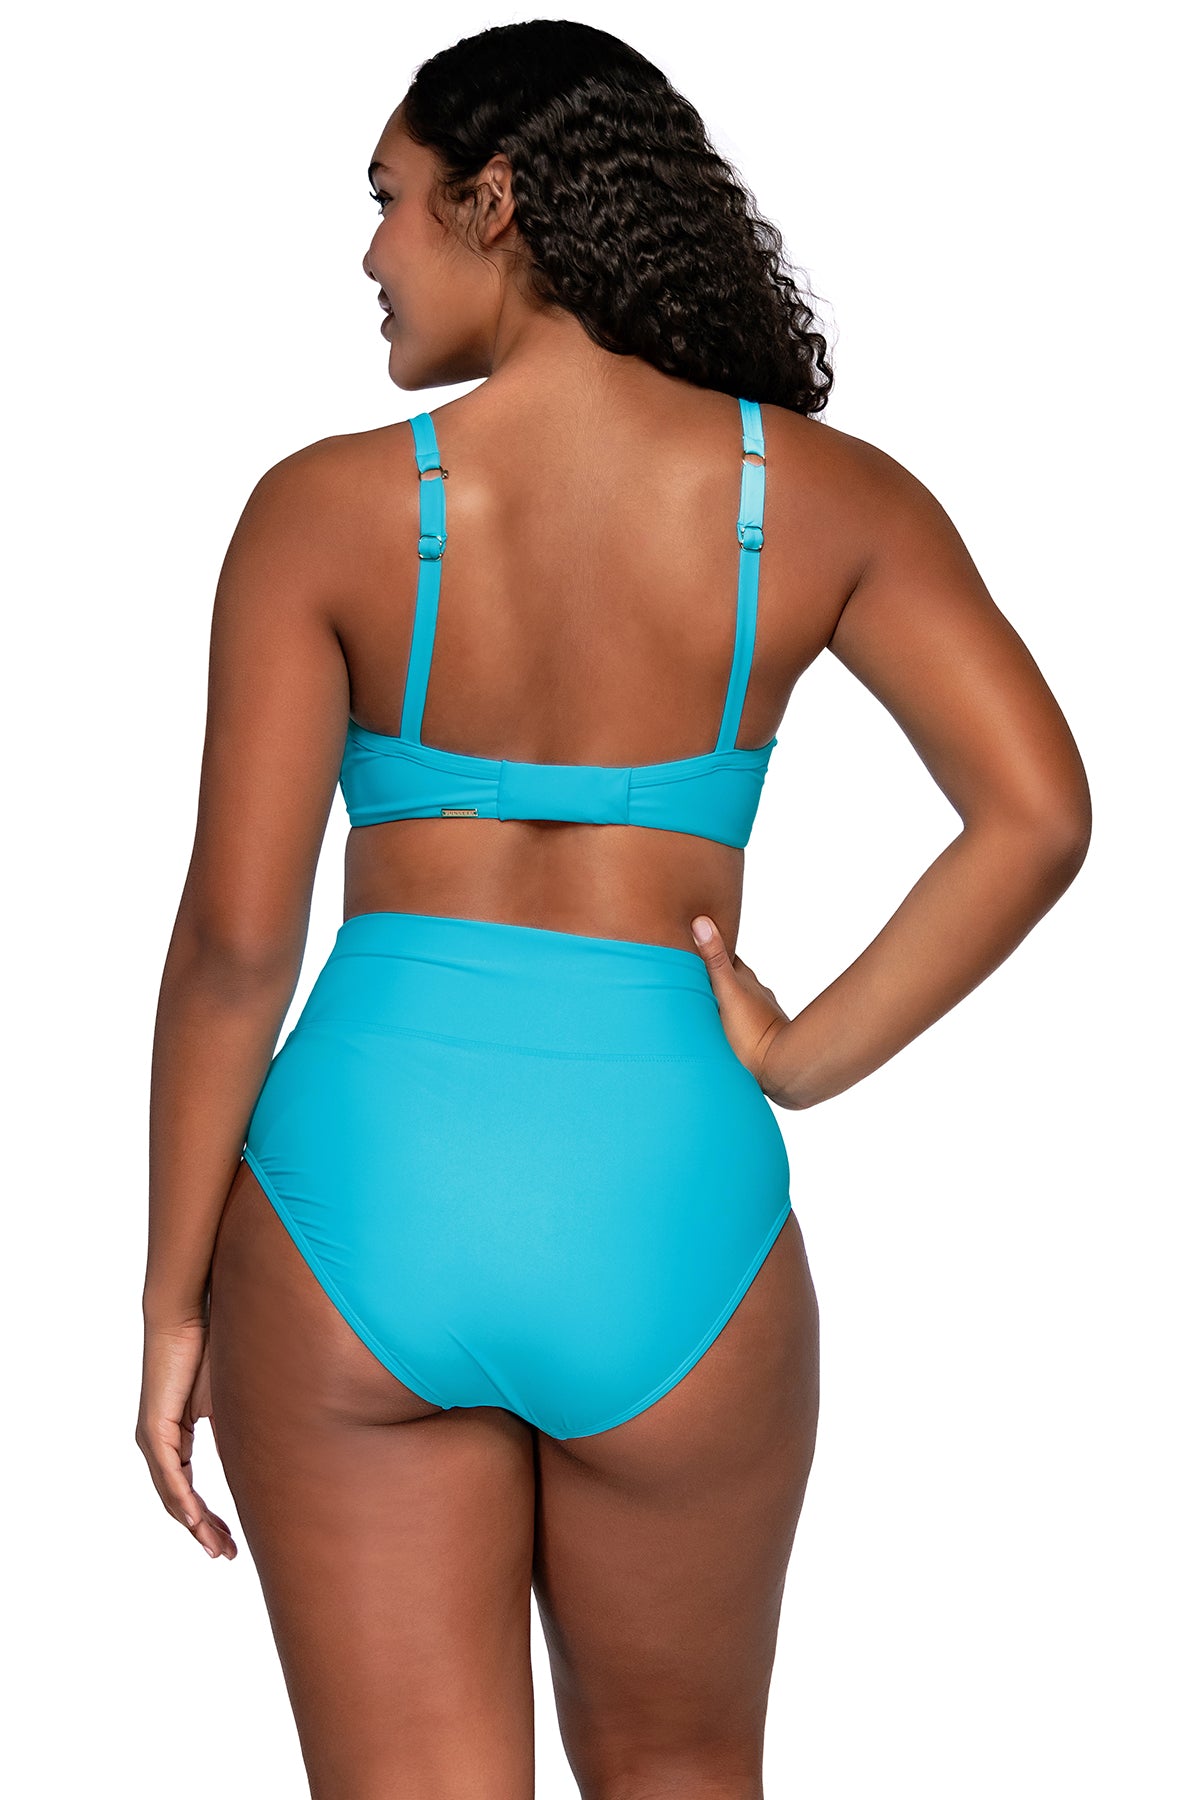 Back view of Sunsets Blue Bliss Crossroads Underwire bikini top with Blue Bliss Hannah High Waist bikini bottom, featuring alternate model